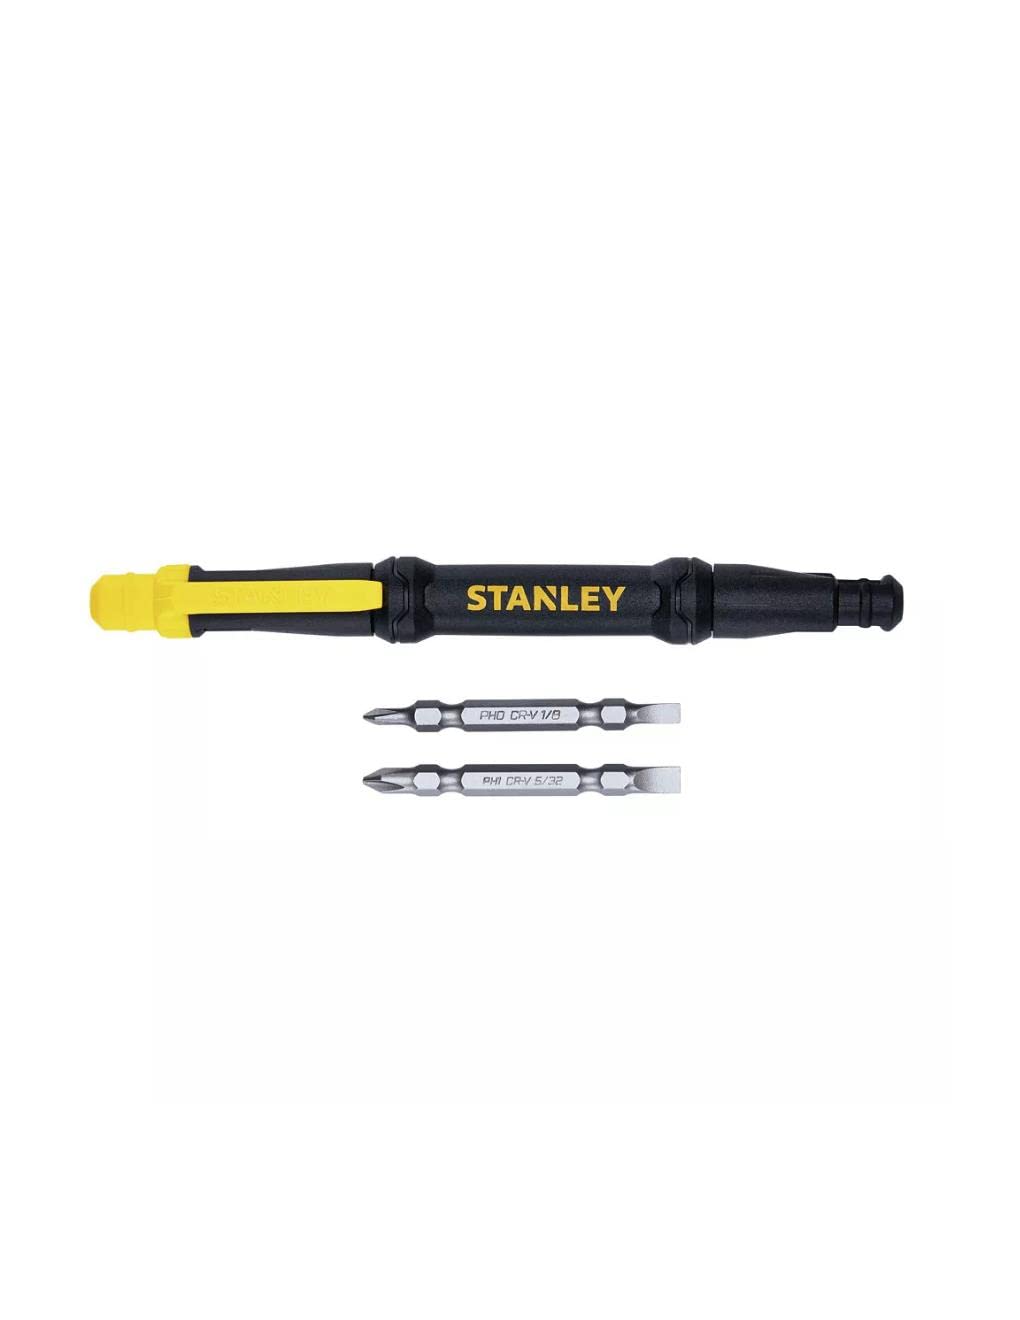 Stanley Stanley 4-Way Pen Screwdriver $2.50 @ Amazon w/ Prime shipping